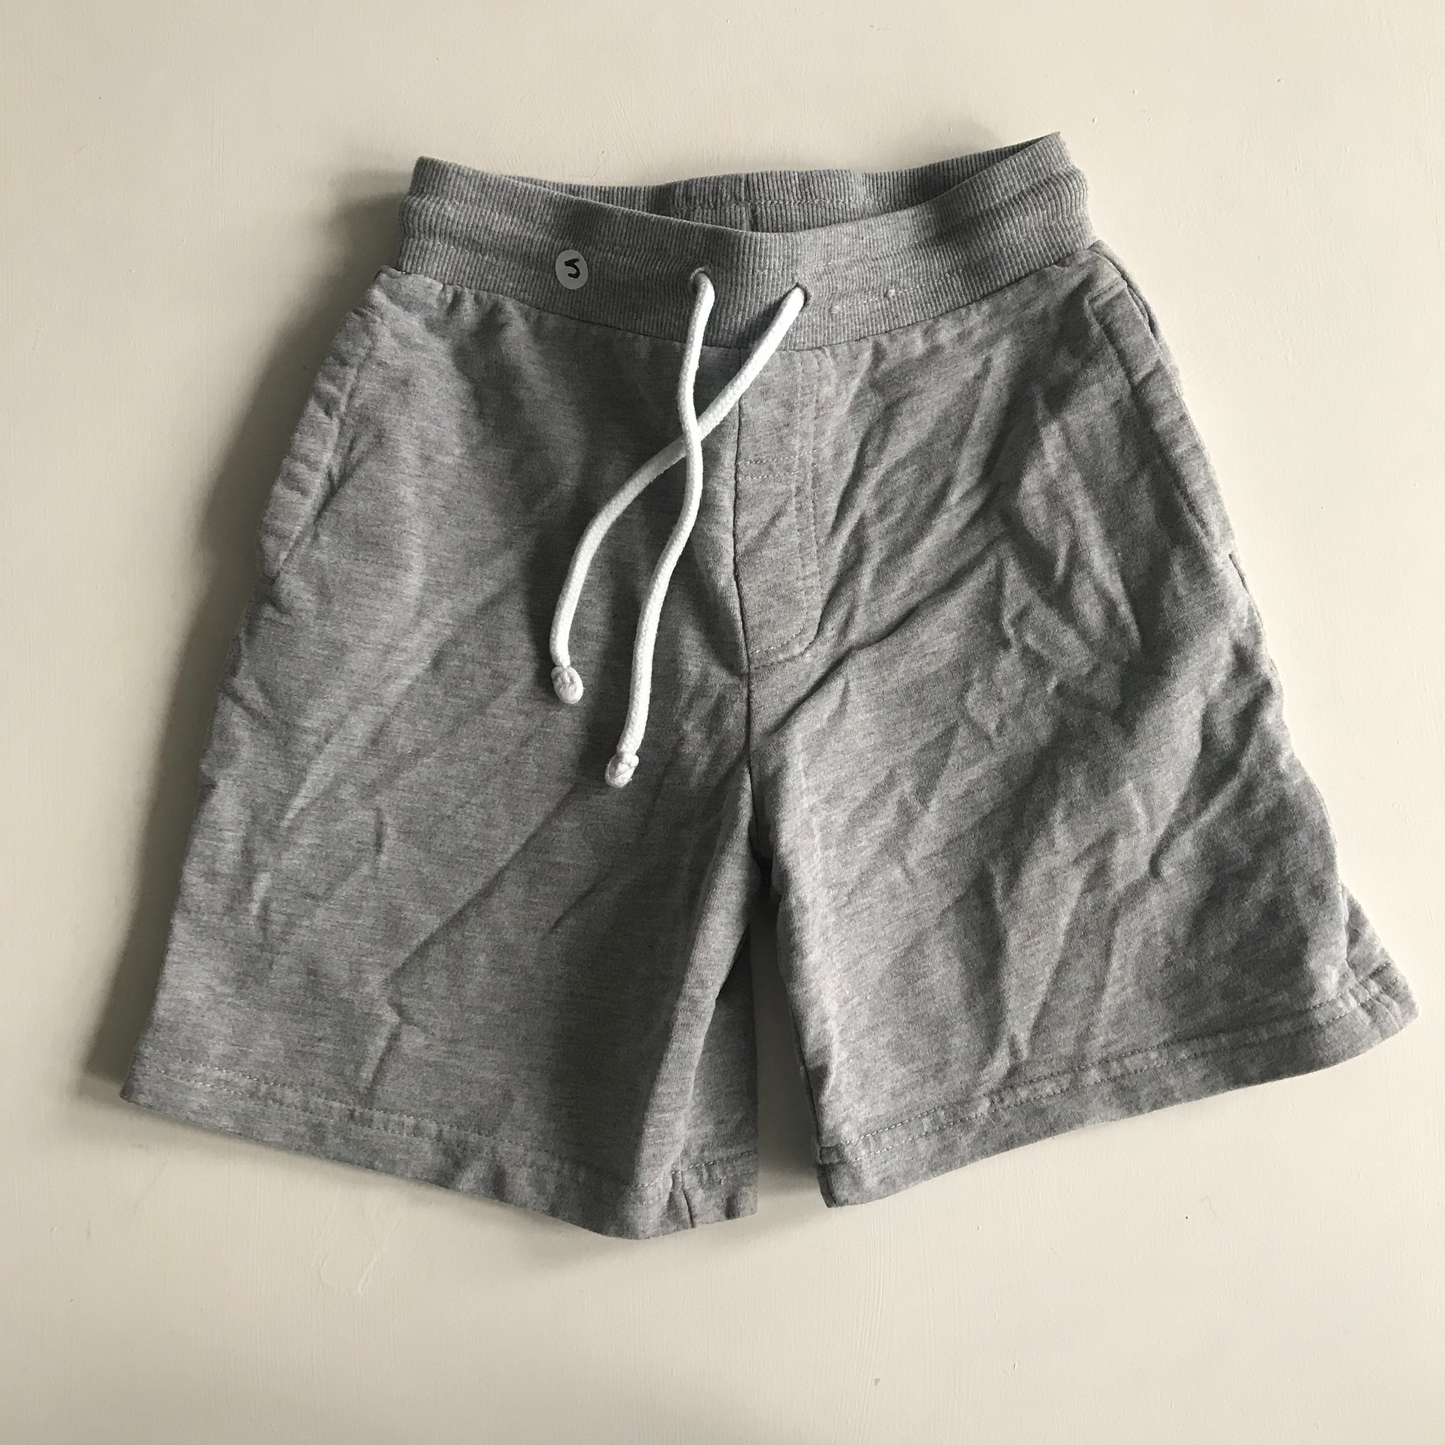 Shorts - Grey Jersey - Age 5